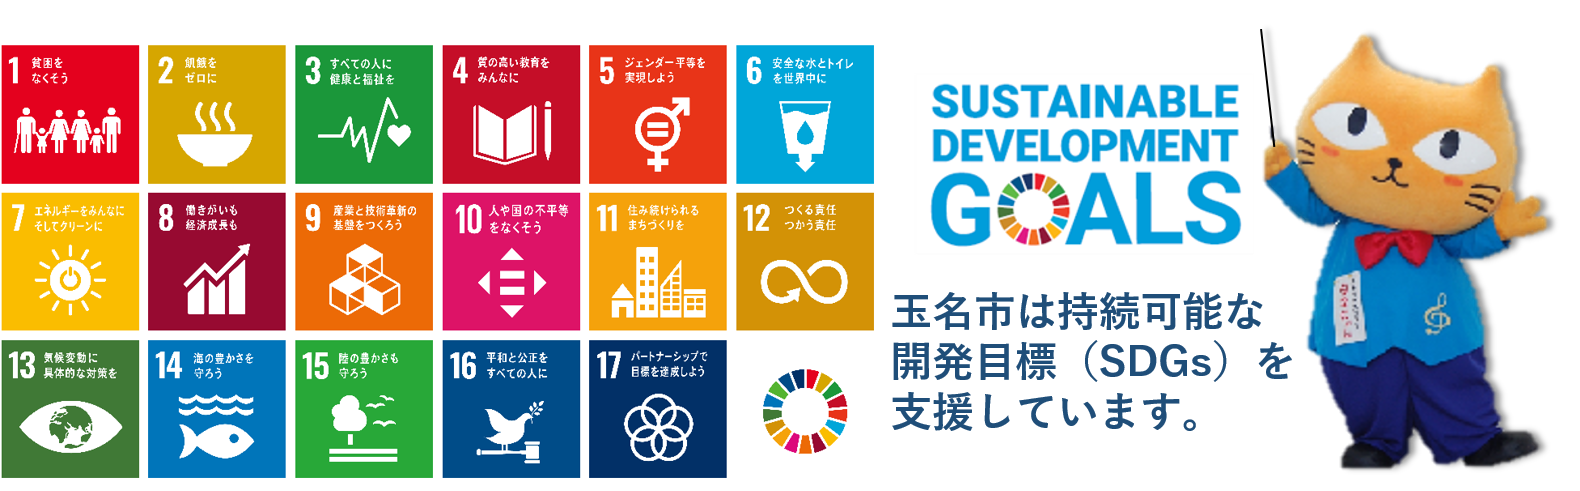 SDGsの画像。画像の詳細はPDFリンクを参照ください。